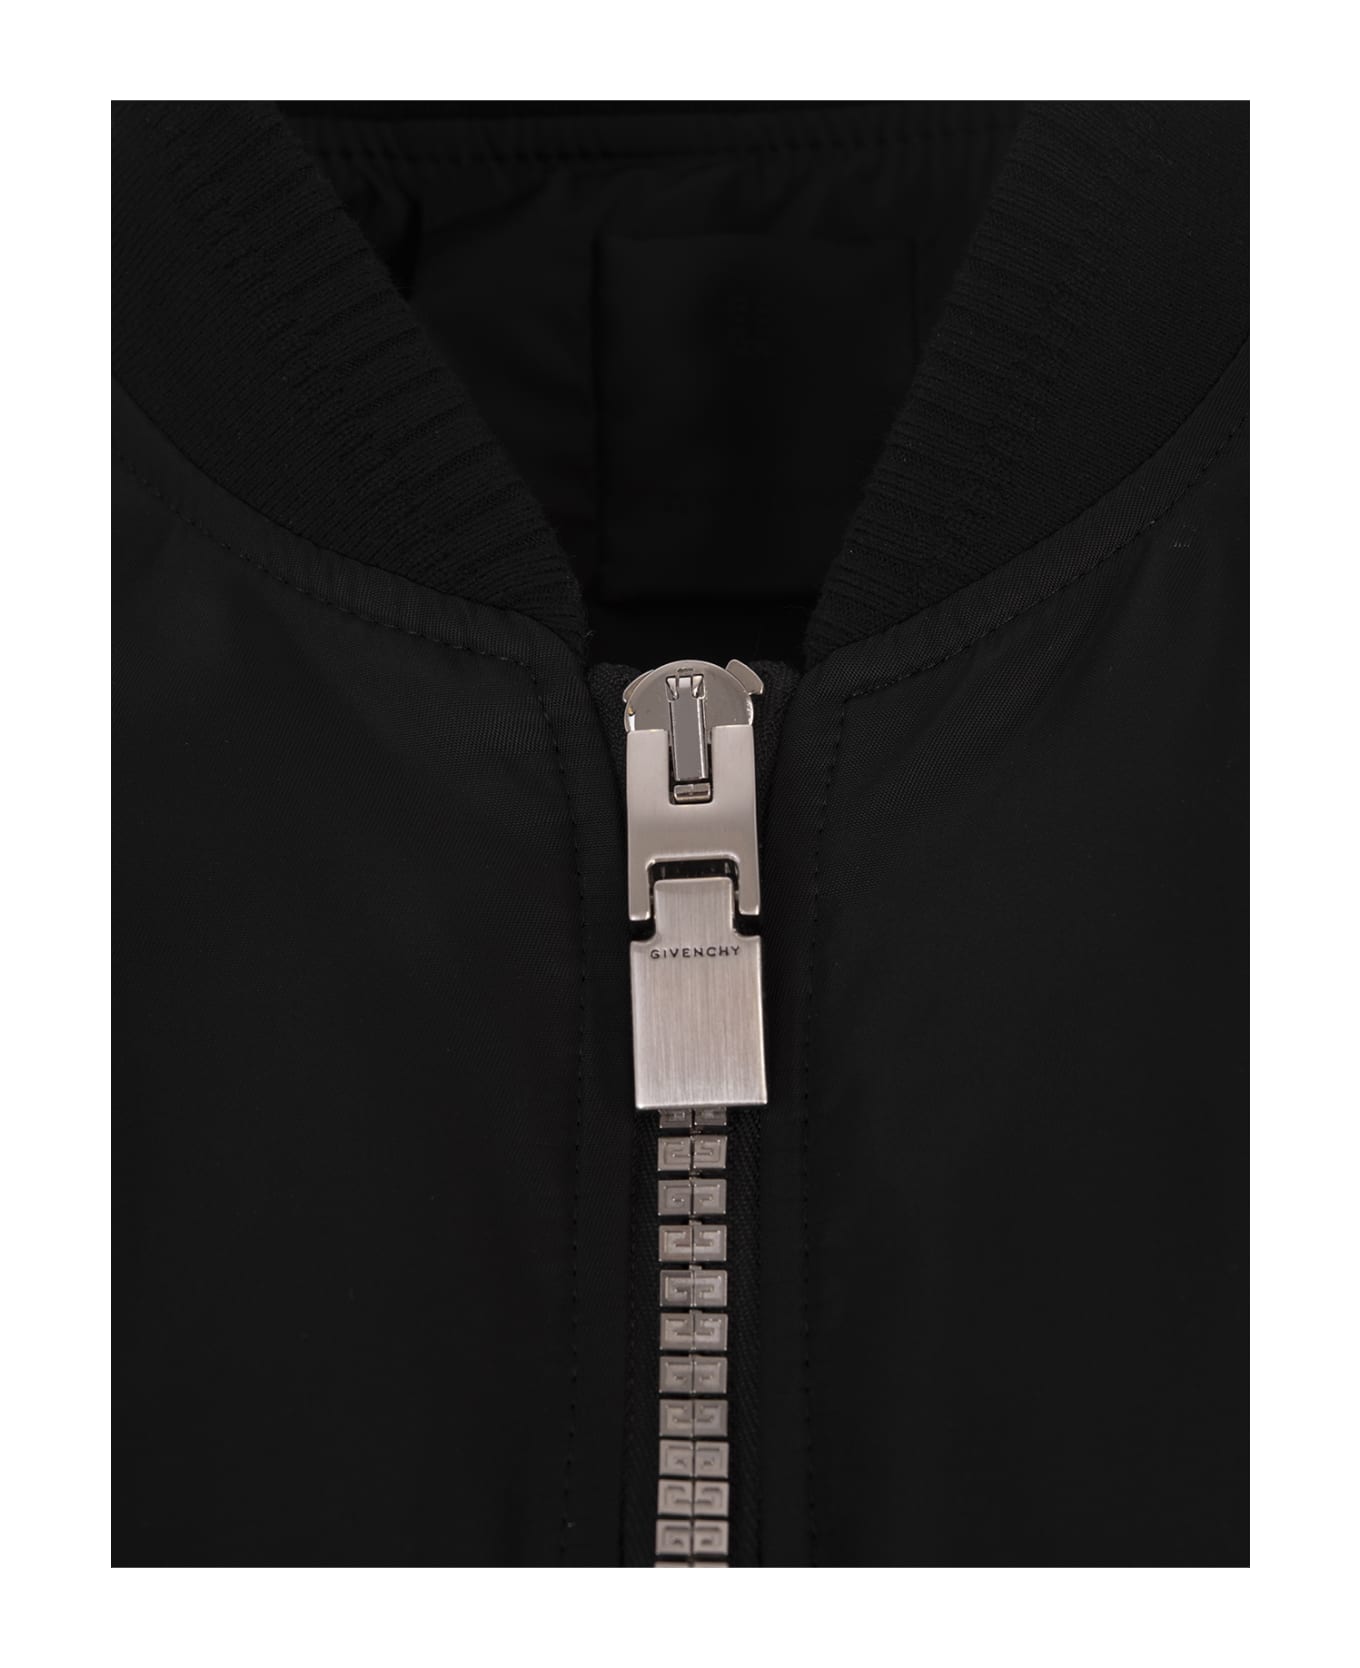 Givenchy Black Givenchy Bomber Jacket With Pocket Detail - Black ジャケット